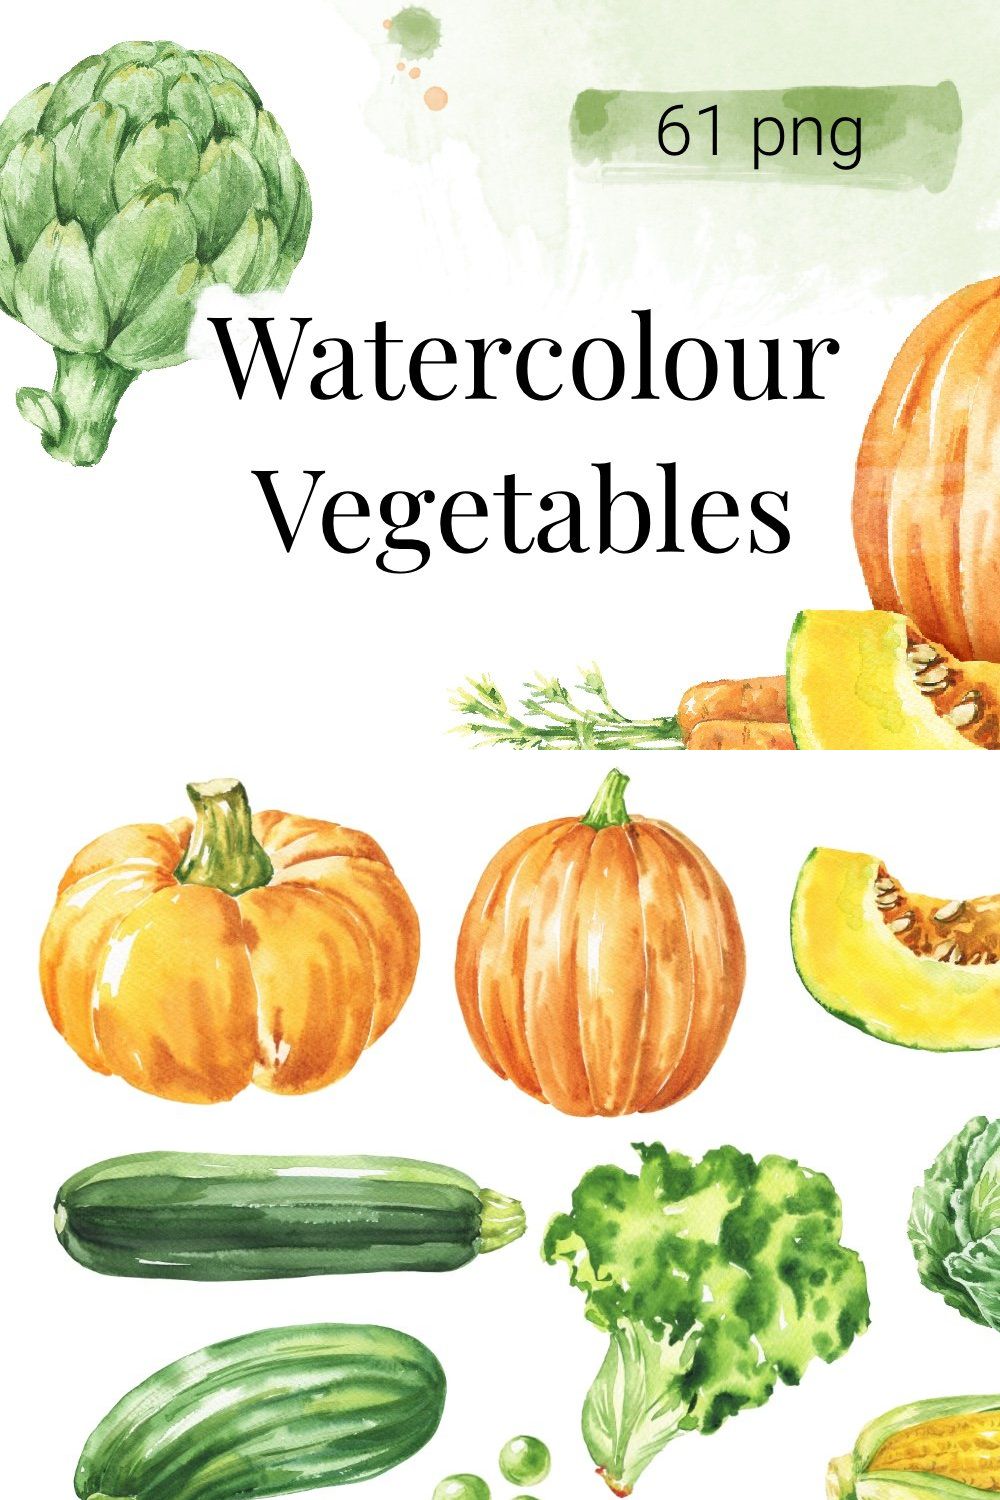 Watercolour Vegetables pinterest preview image.